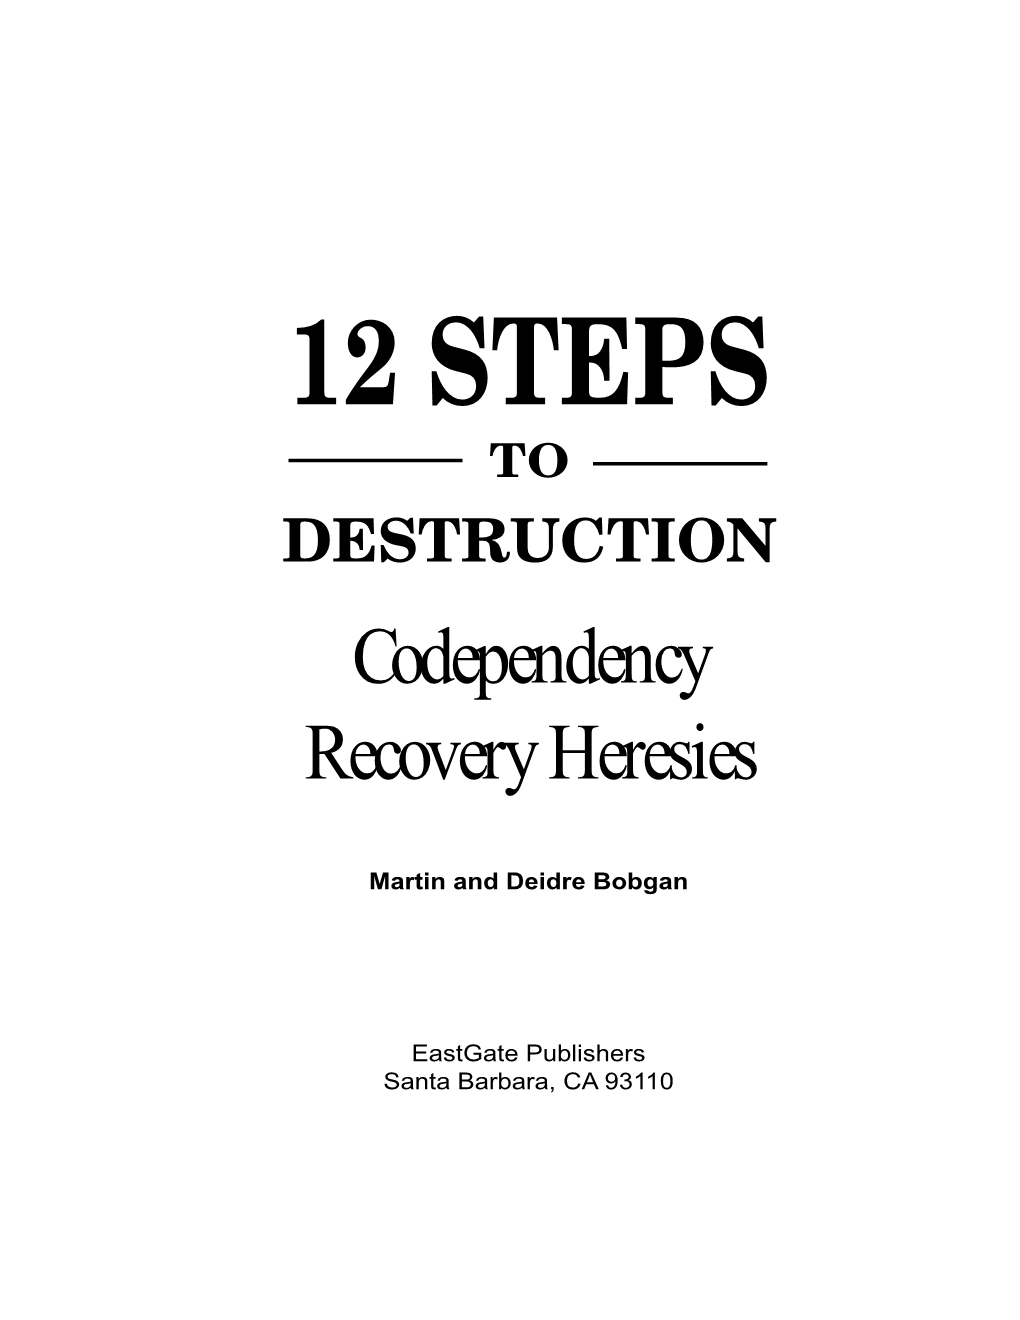 12 Step to Destruction